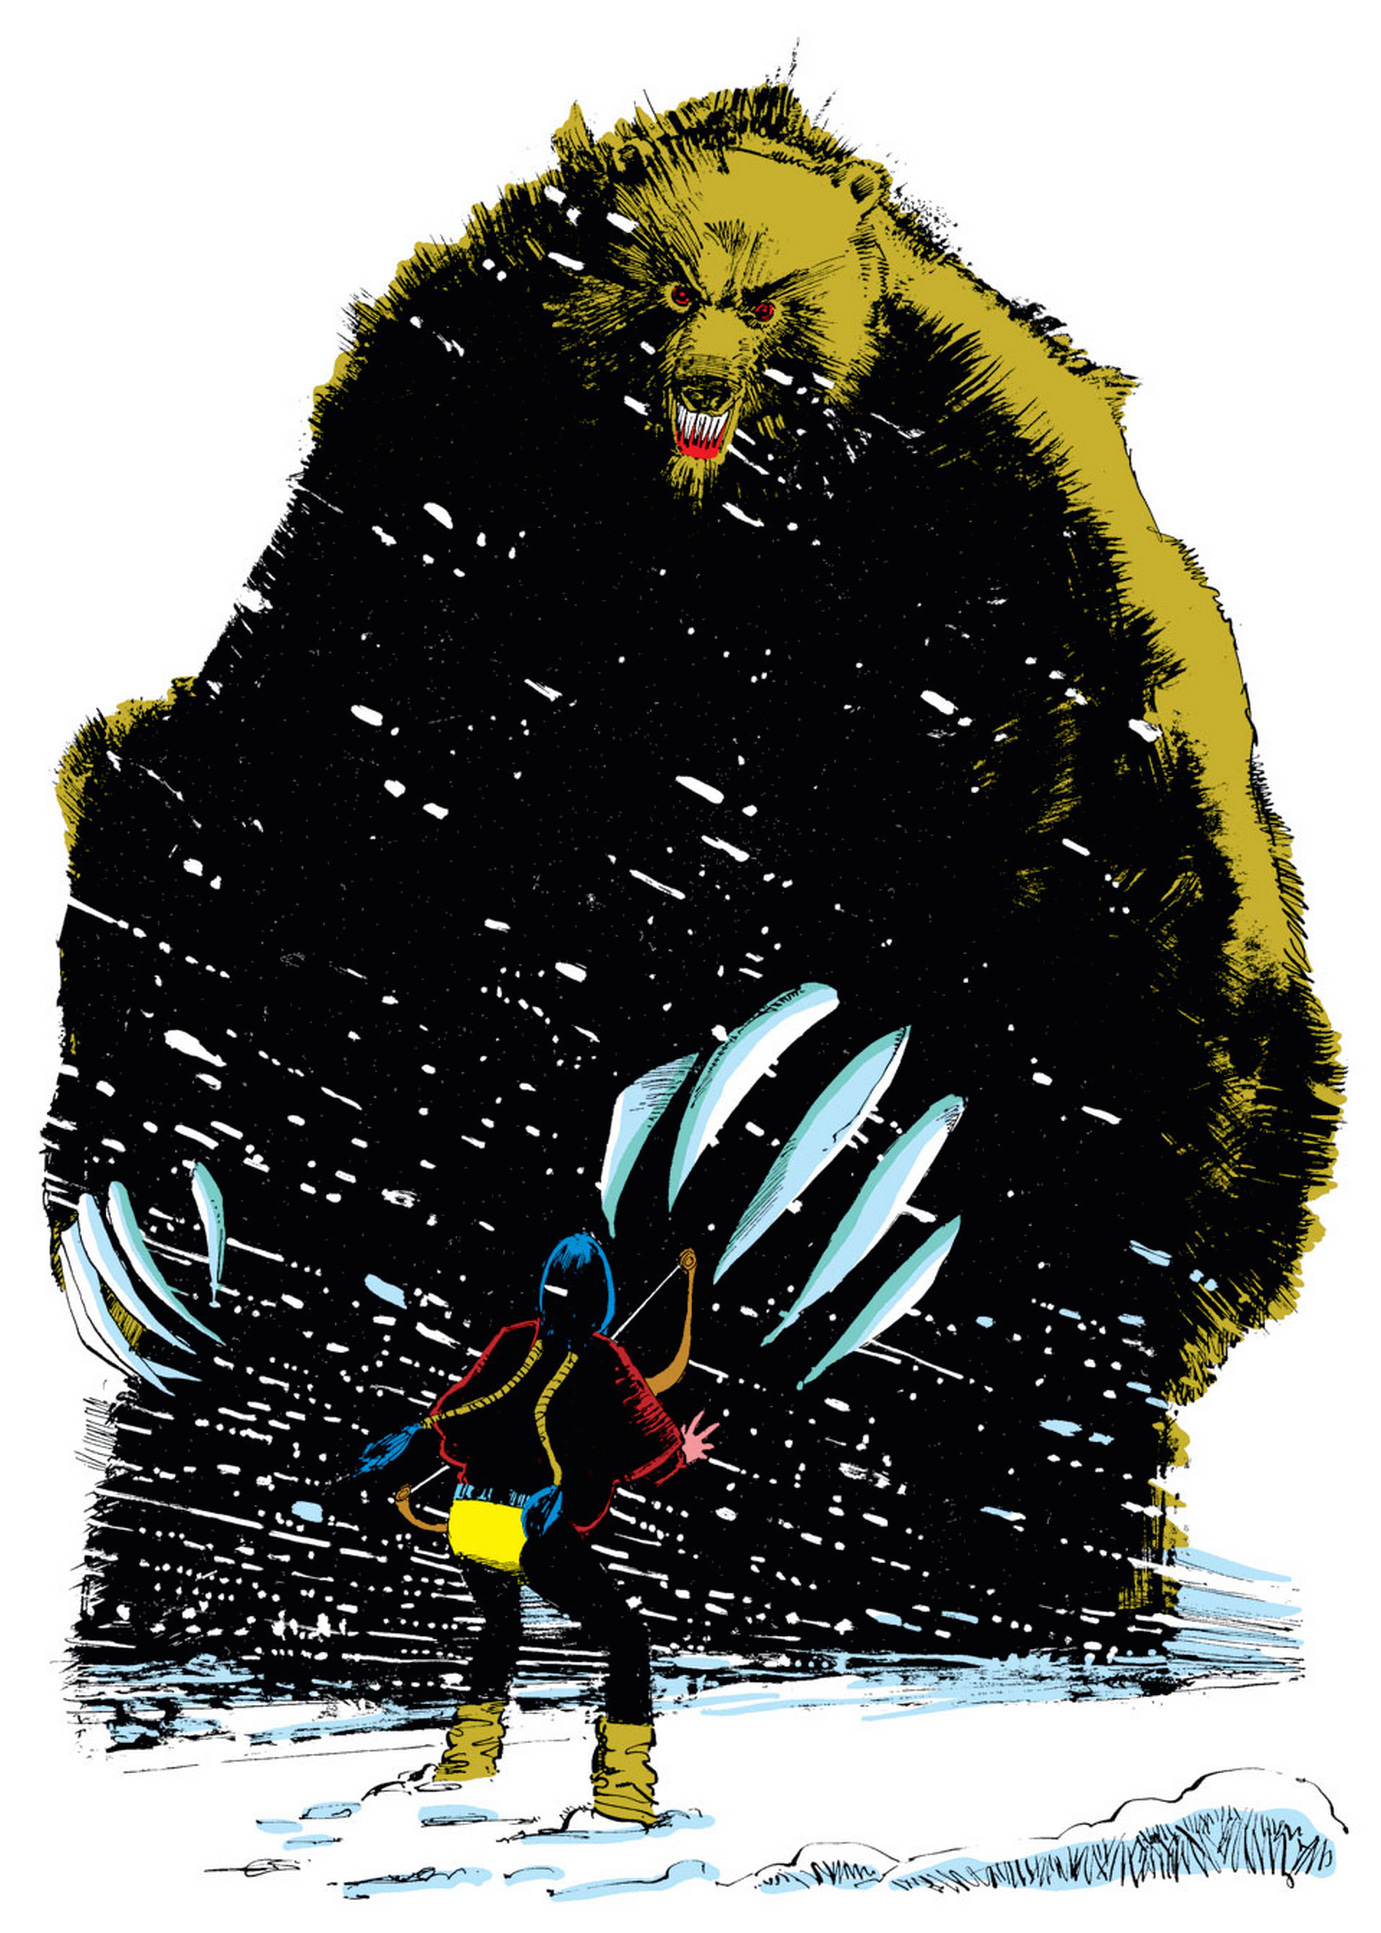 Demon Bear Saga: The Definitive New Mutants Storyline Explained